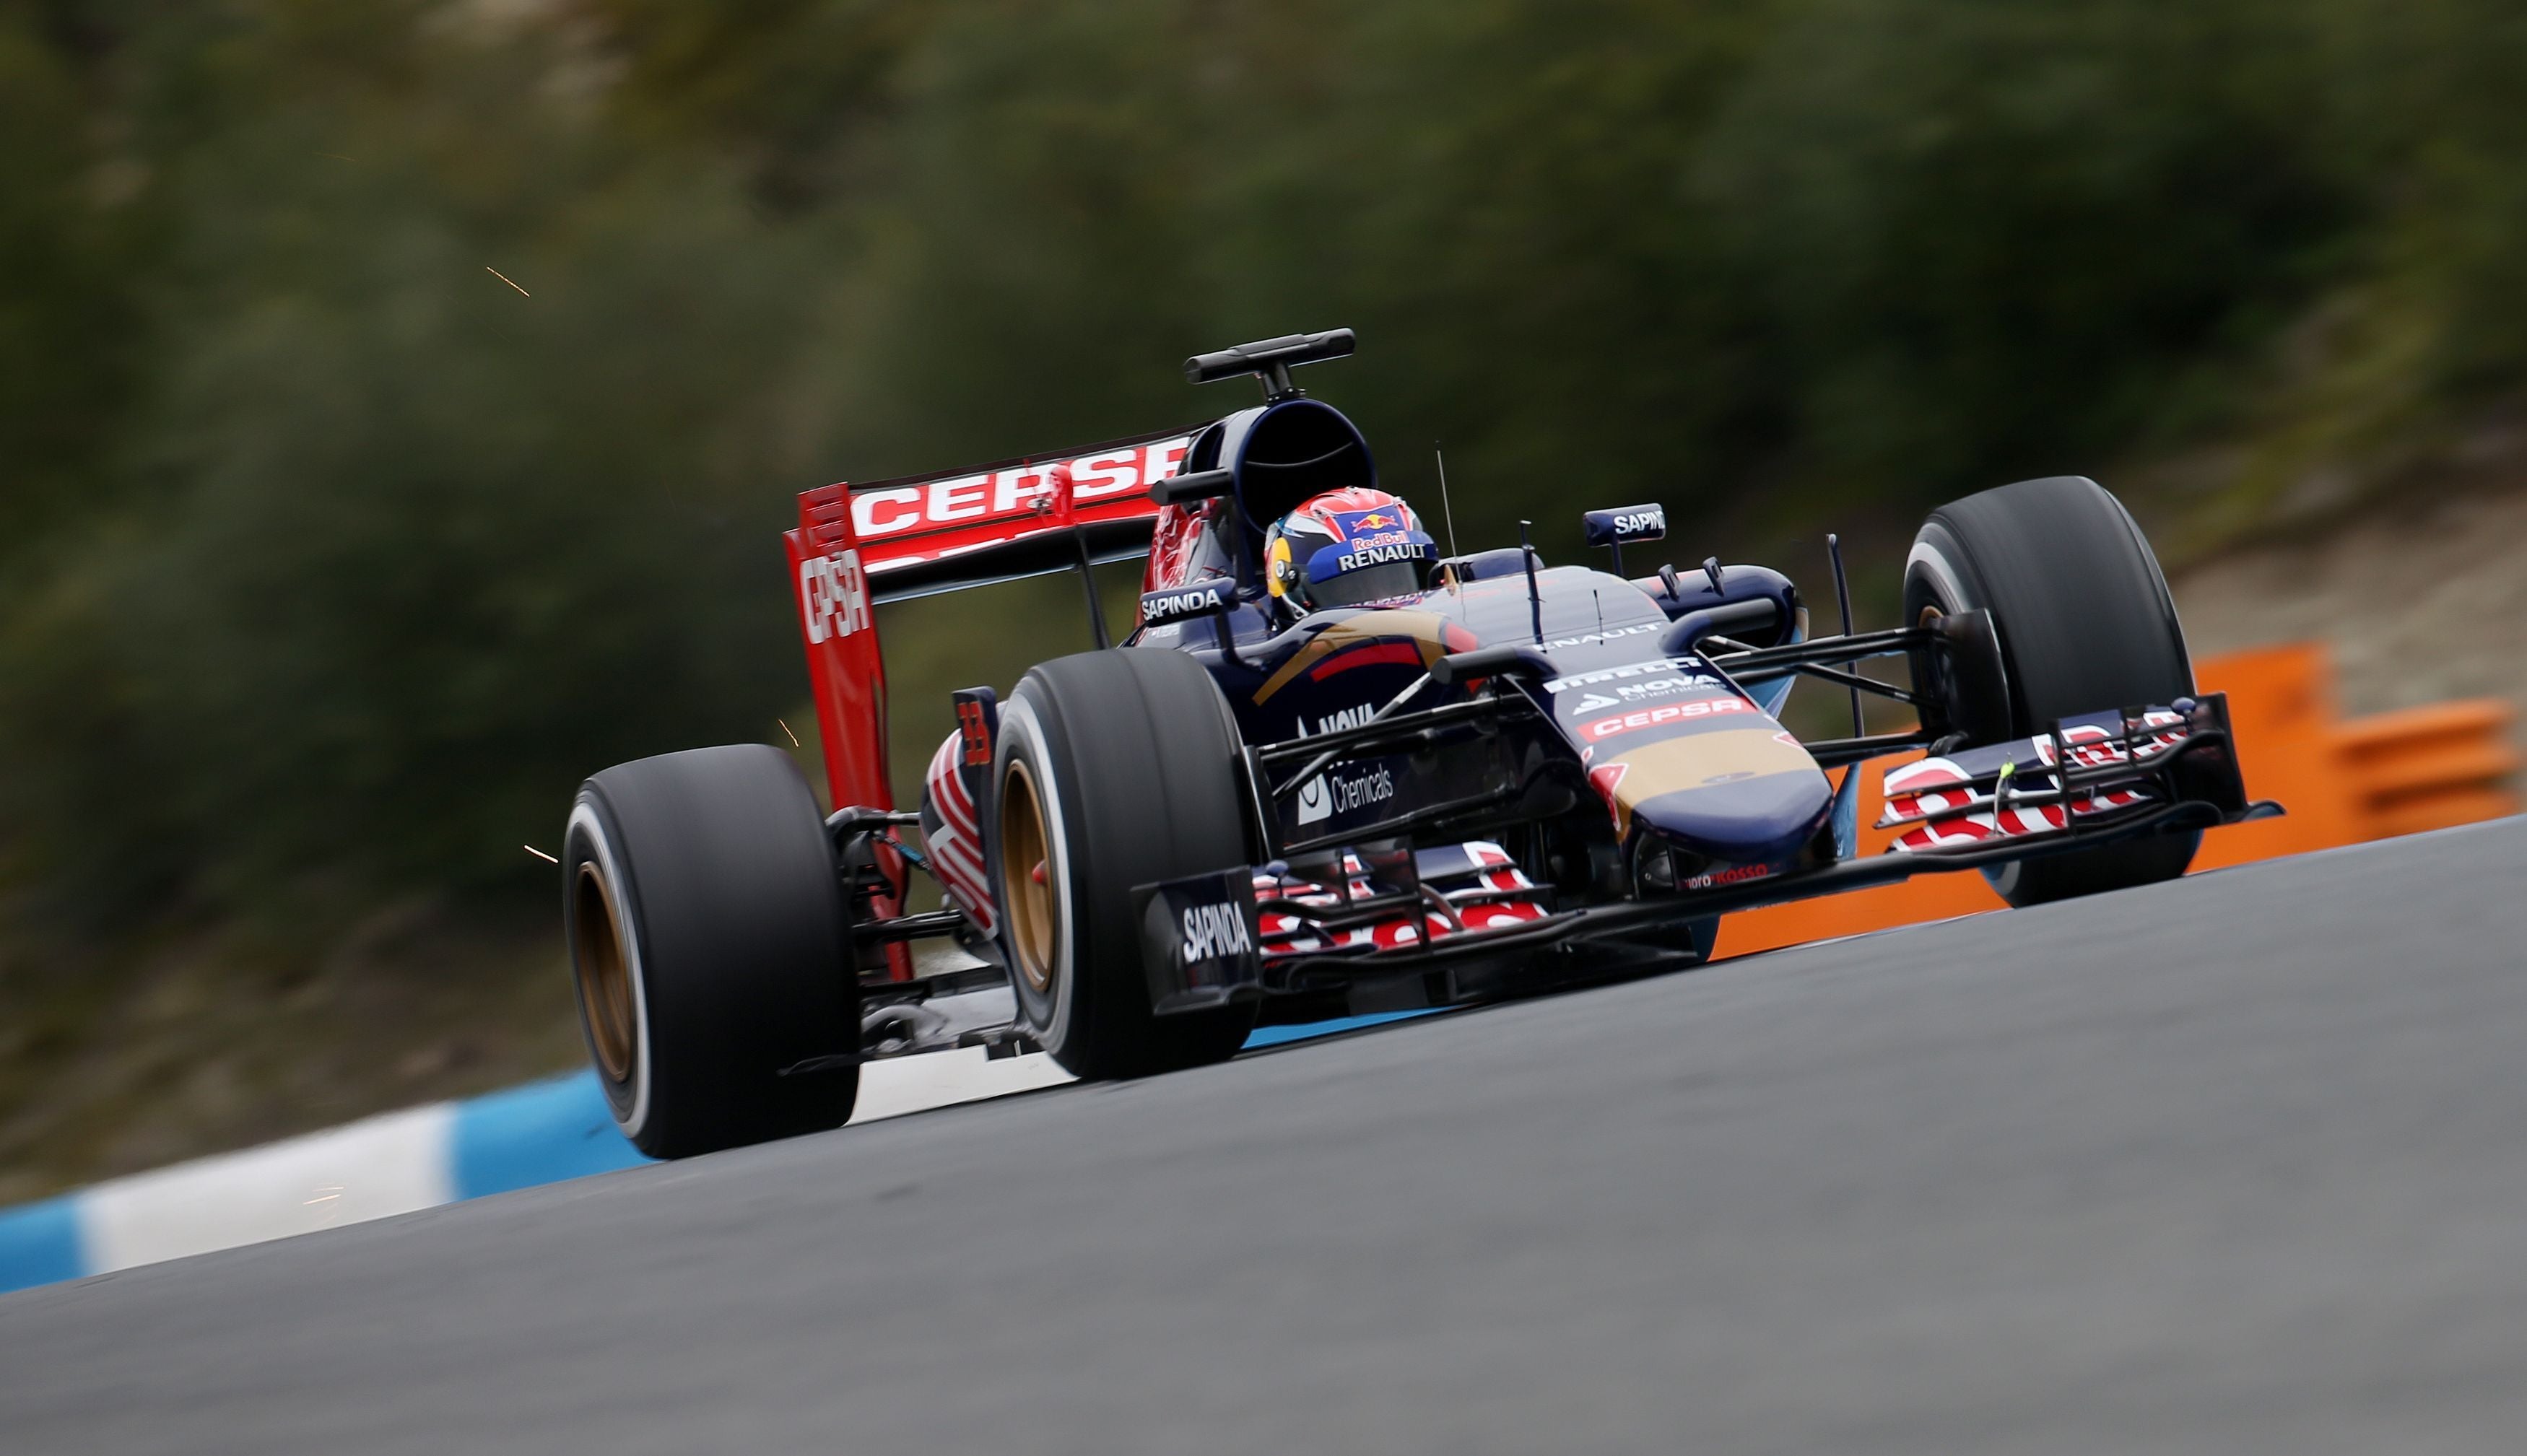 Max Verstappen in 2015 pre-season testing for Toro Rosso at the Circuito de Jerez in Jerez, Spain.